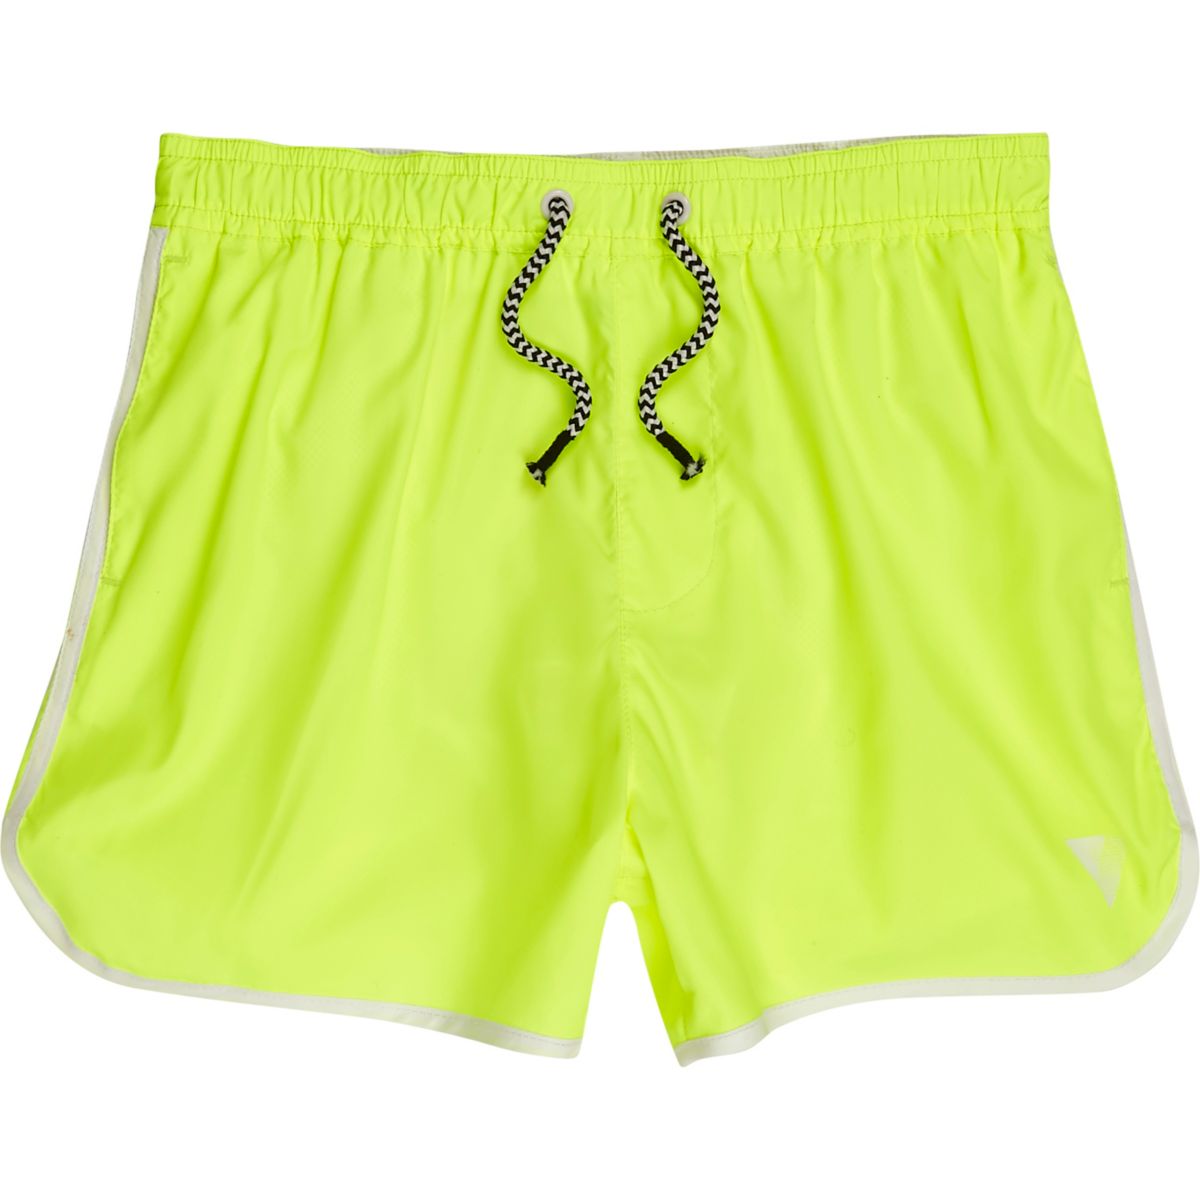 Boys fluro yellow runner swim trunks - Vacation Shop - Sale - boys